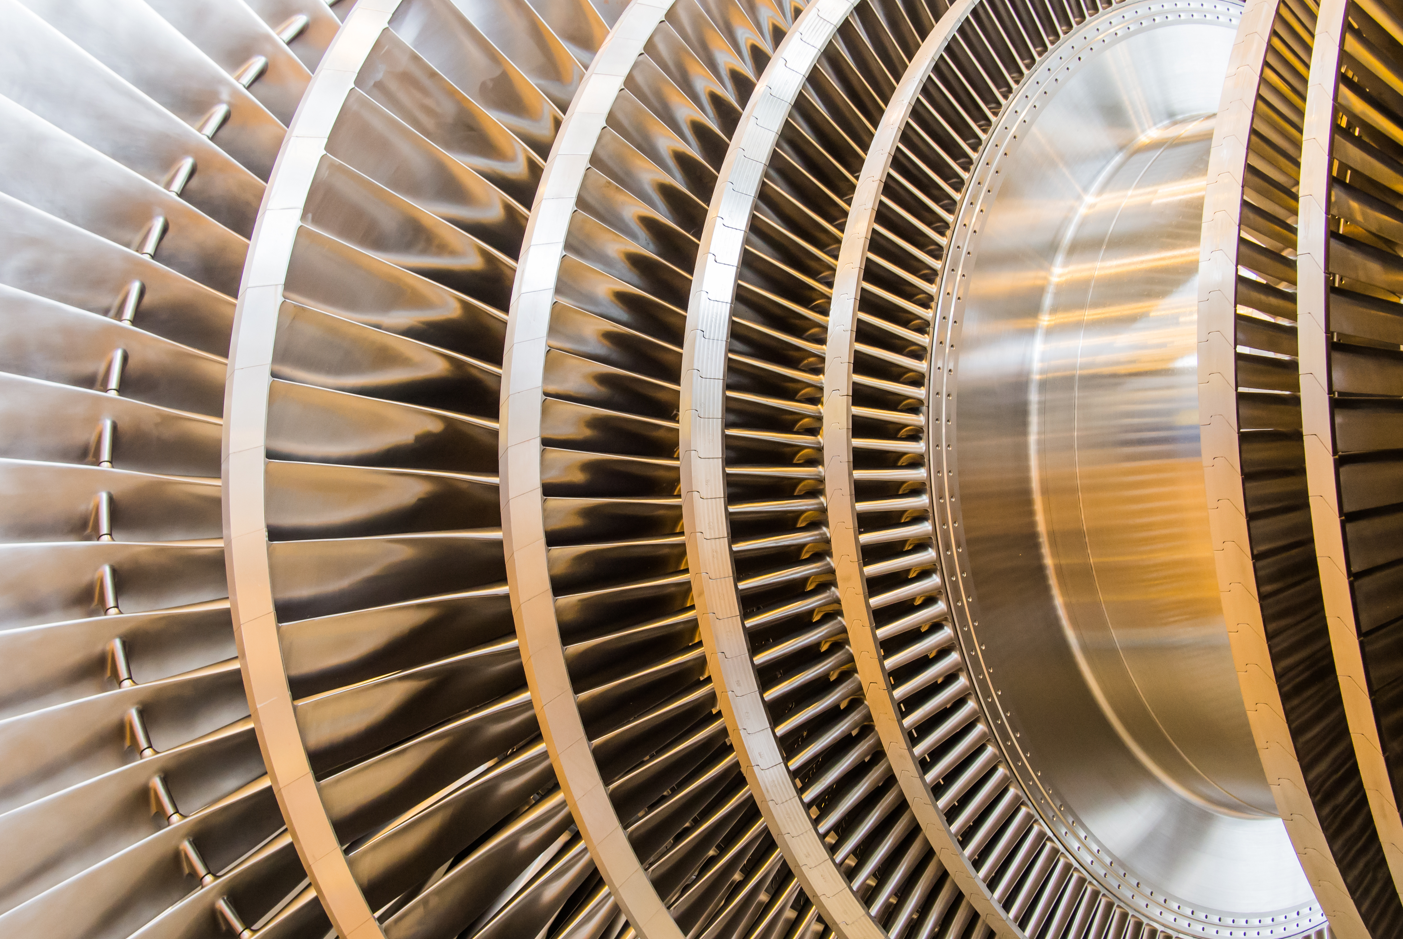 Steam turbine trends in power generation